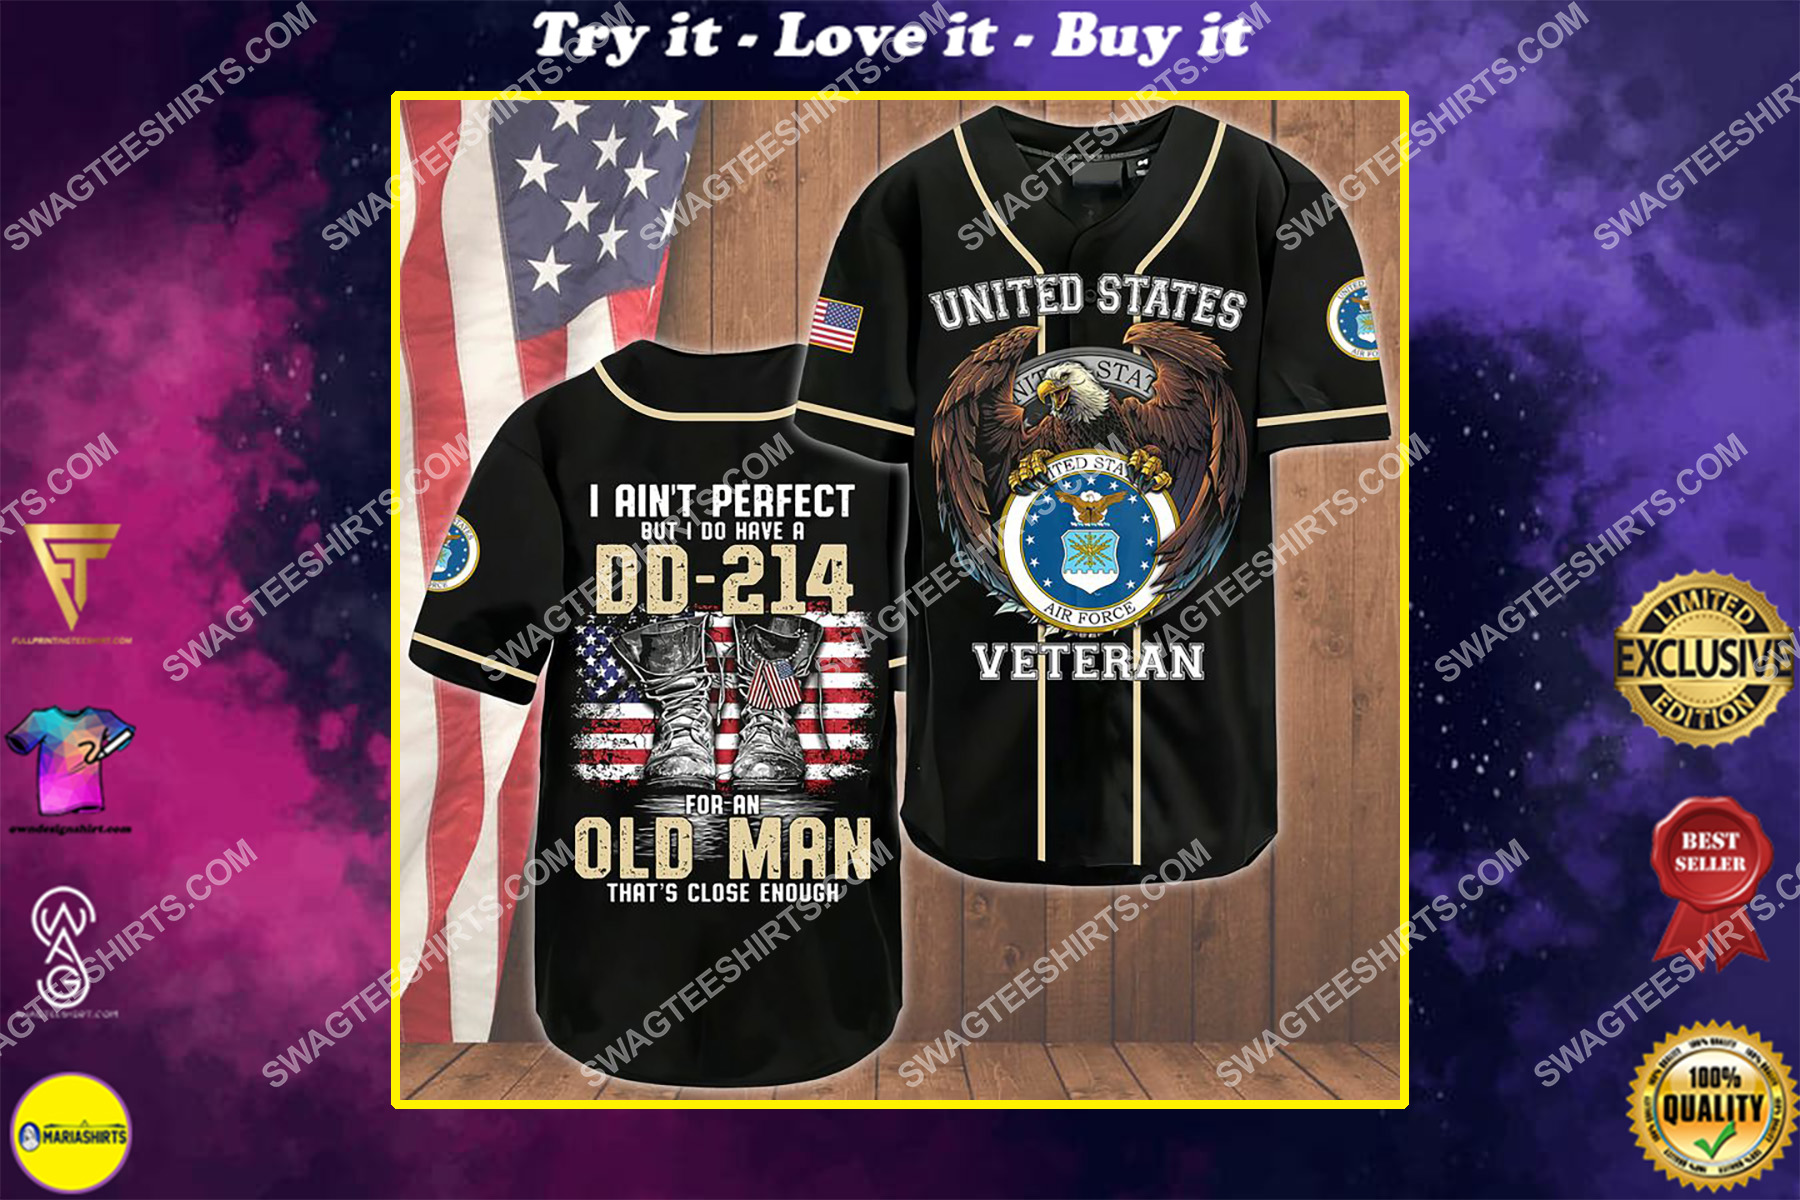 i ain't pperfect but i do have a dd-214 for an old man that's close enough air force veteran baseball shirt